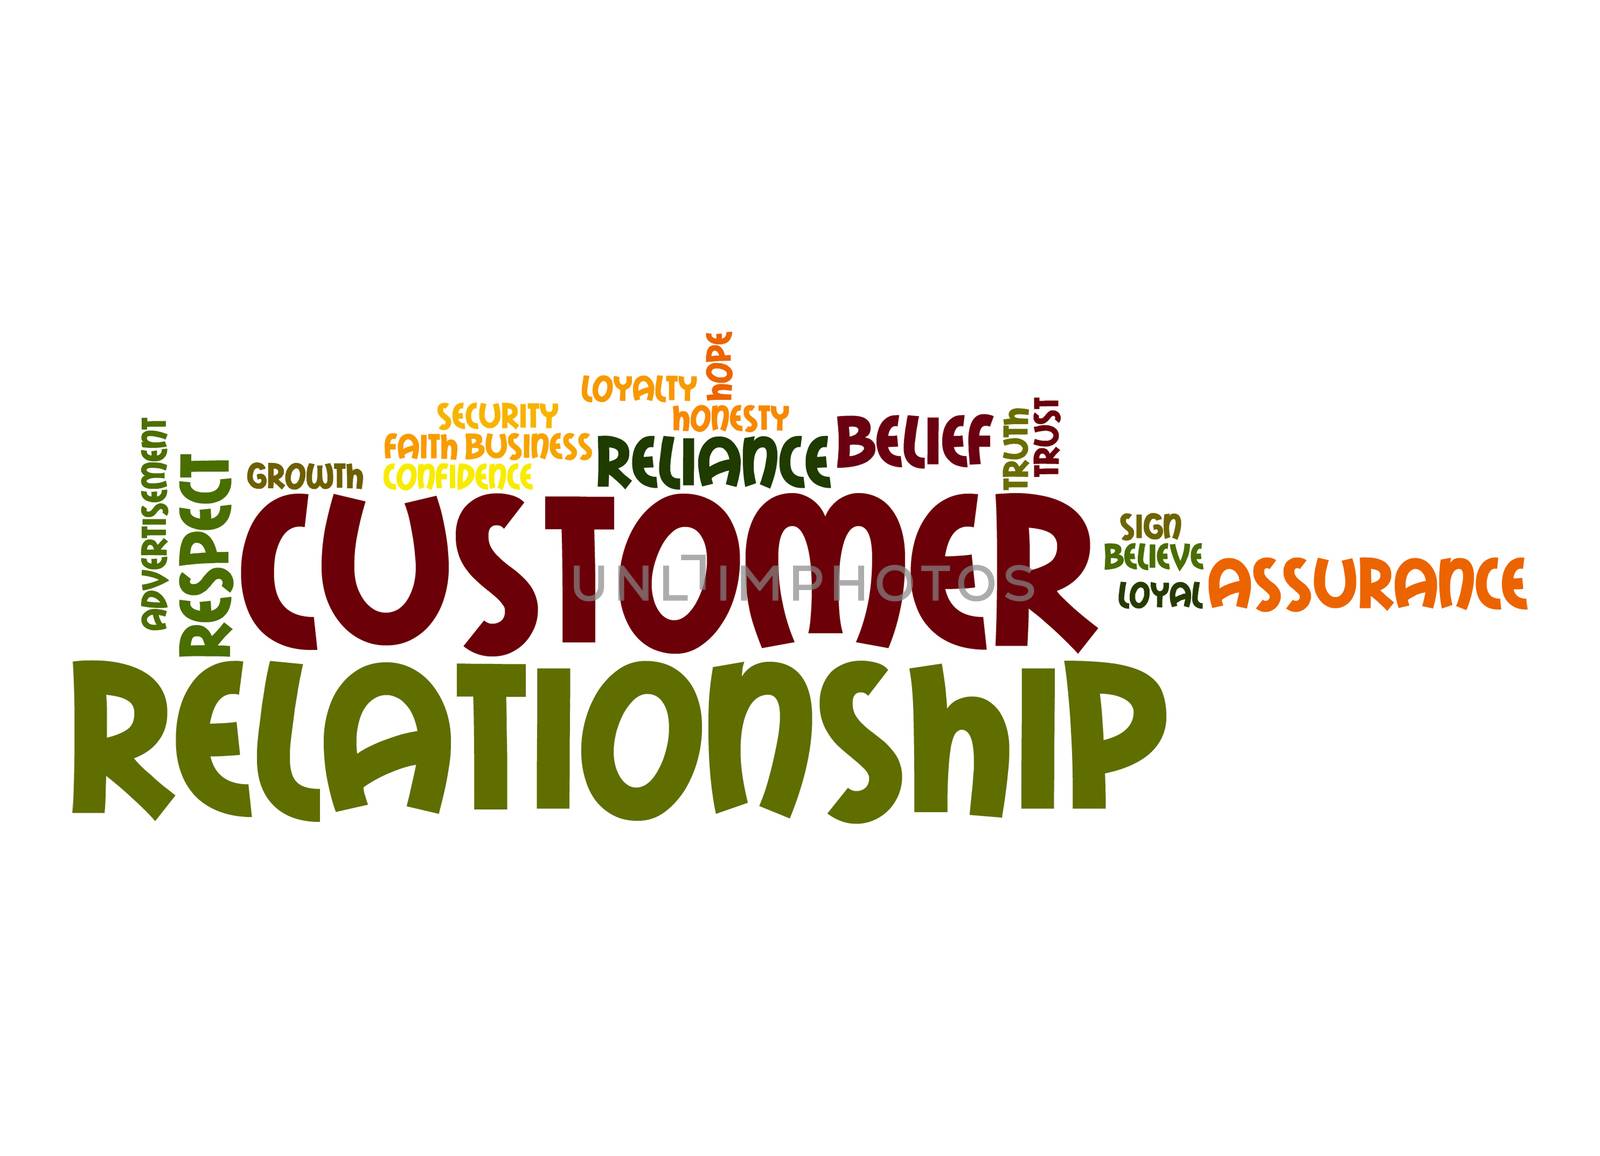 Customer relationship word cloud